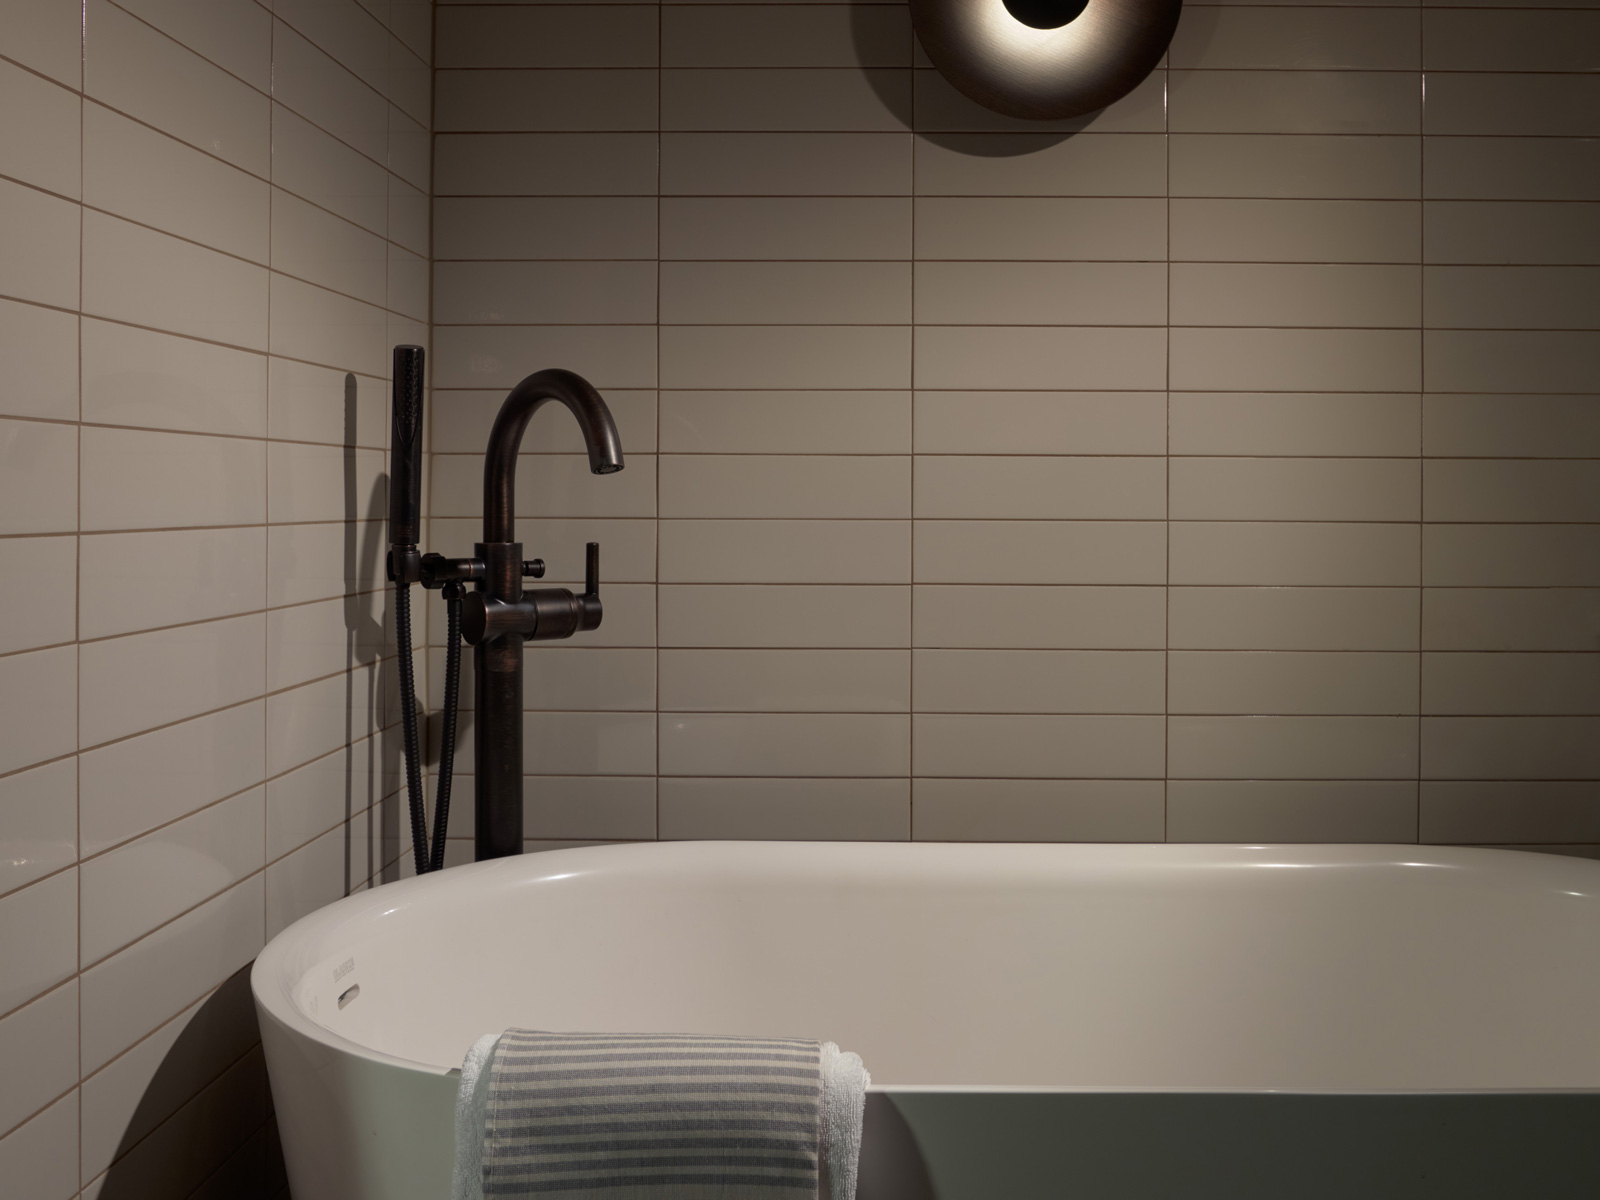 Large soaking tub with modern gray subway tile and circular light fixture